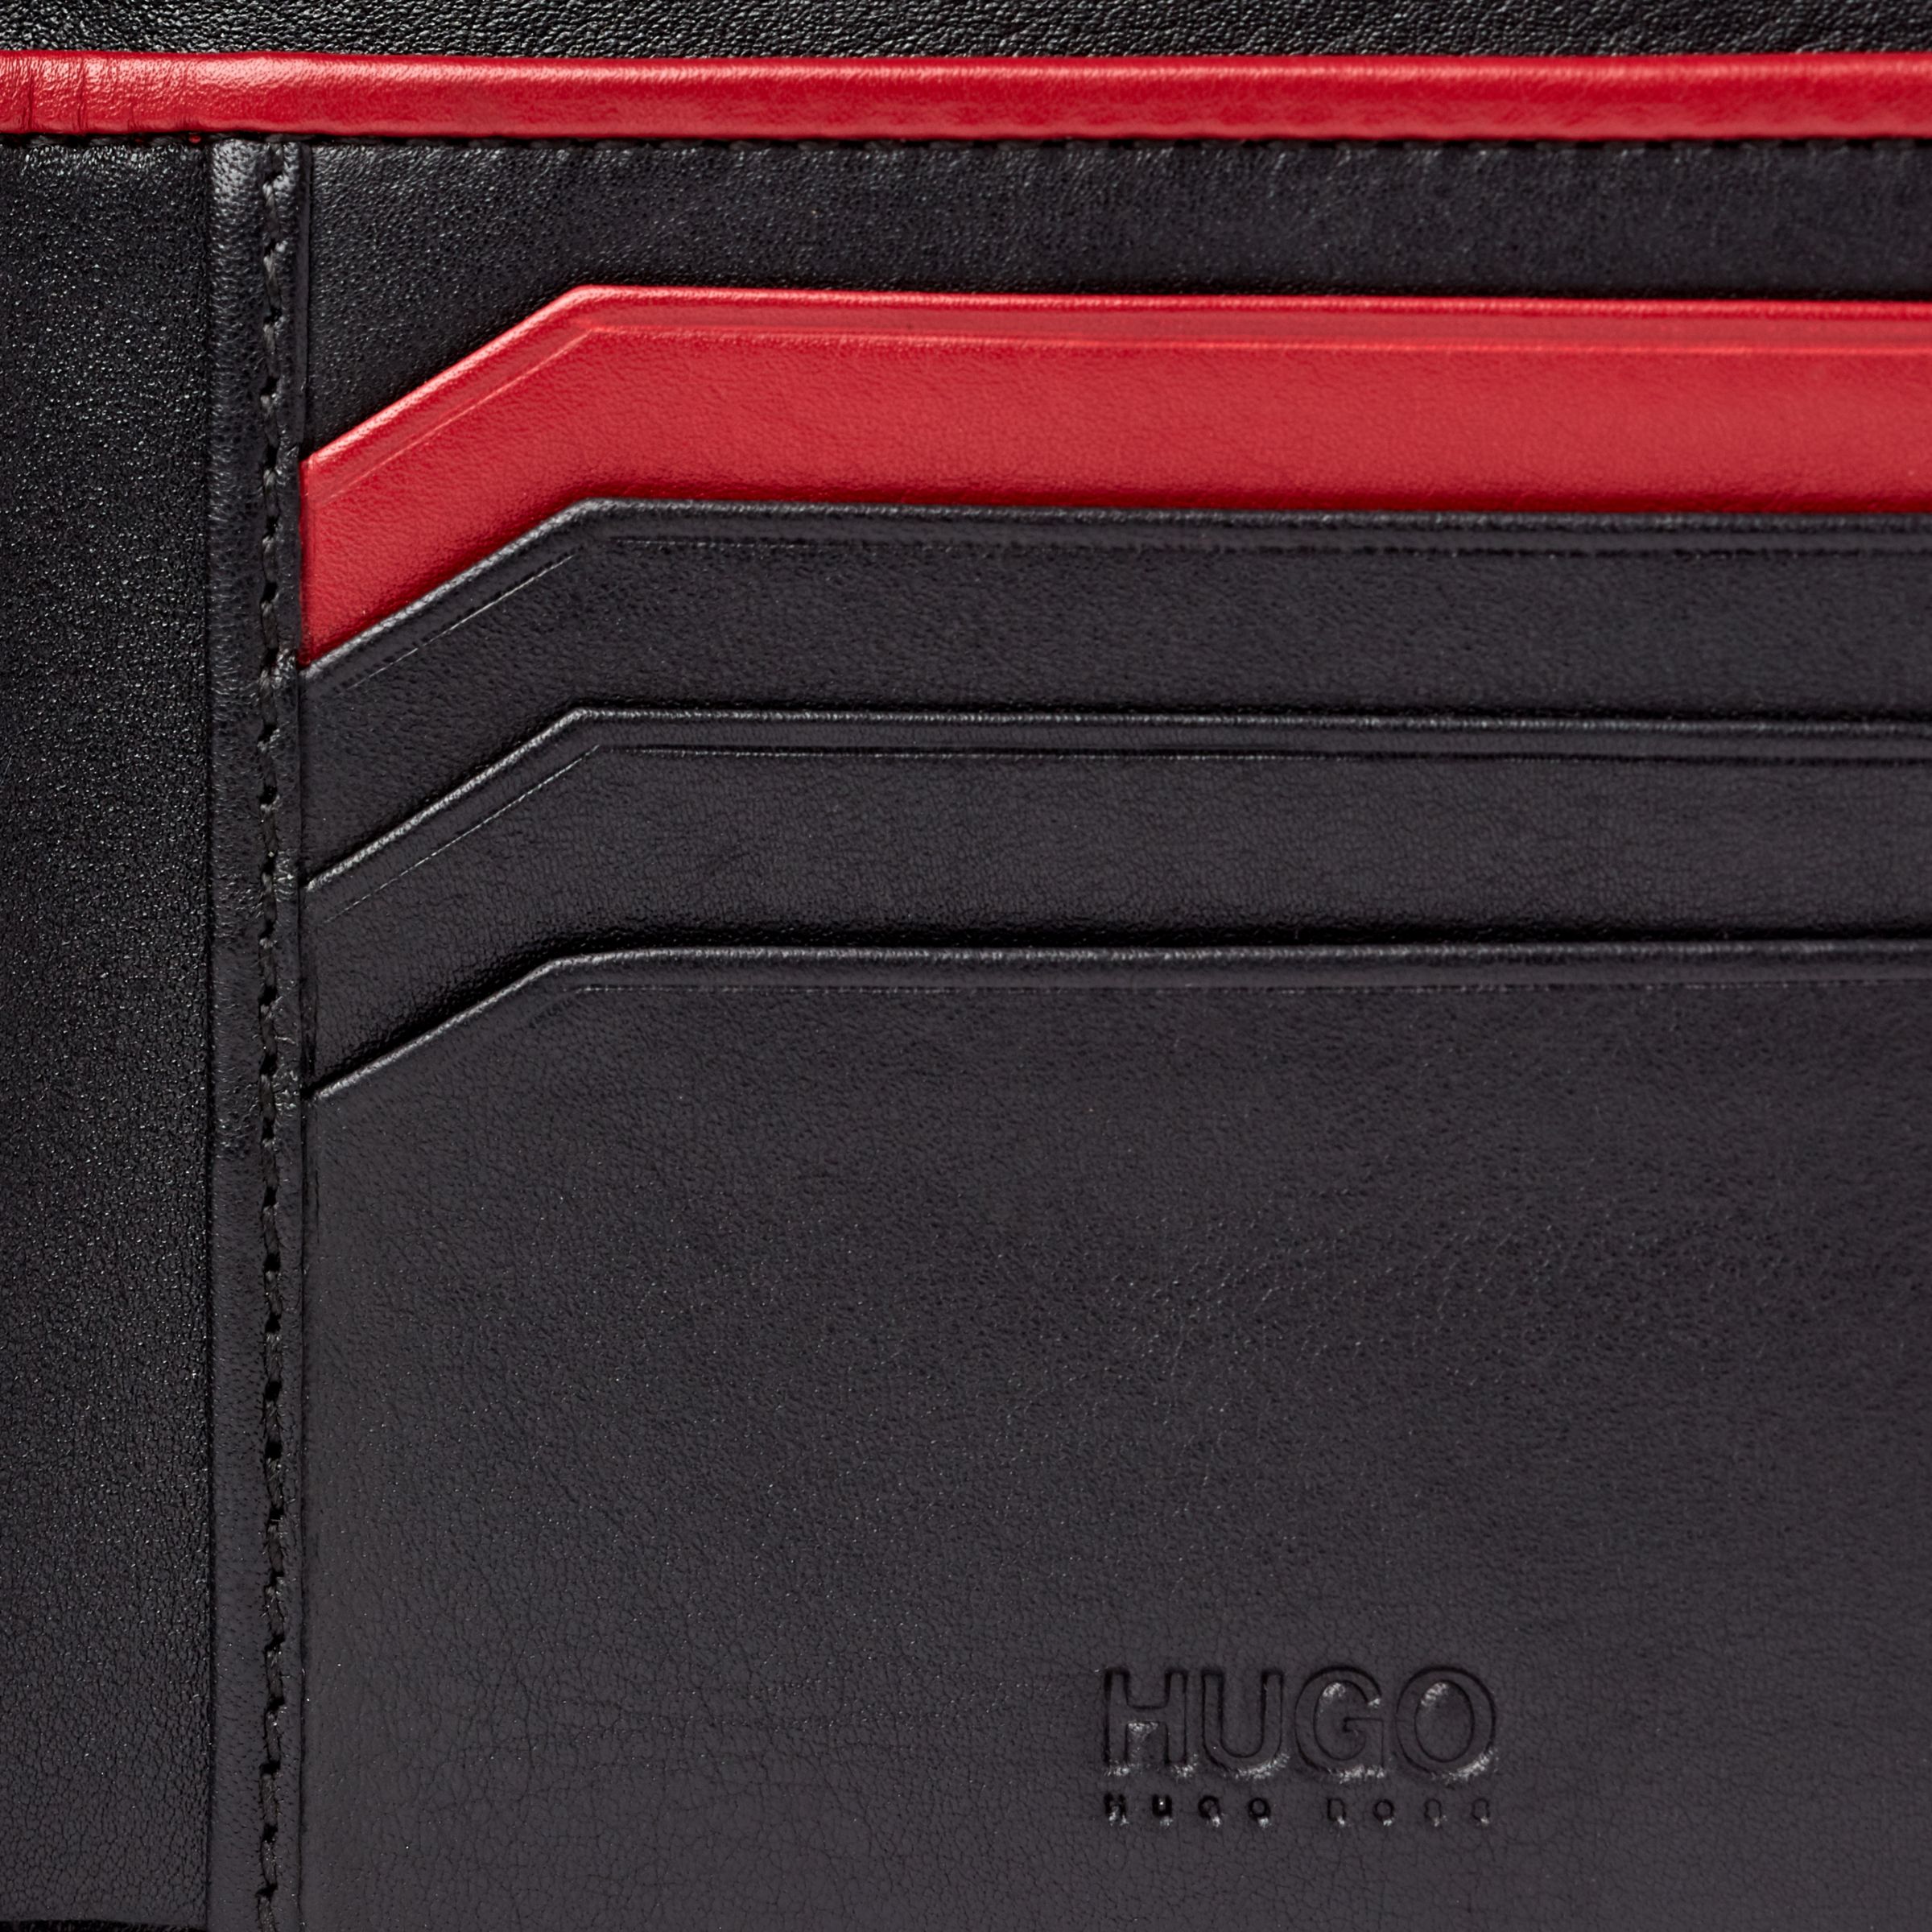 hugo boss red and black